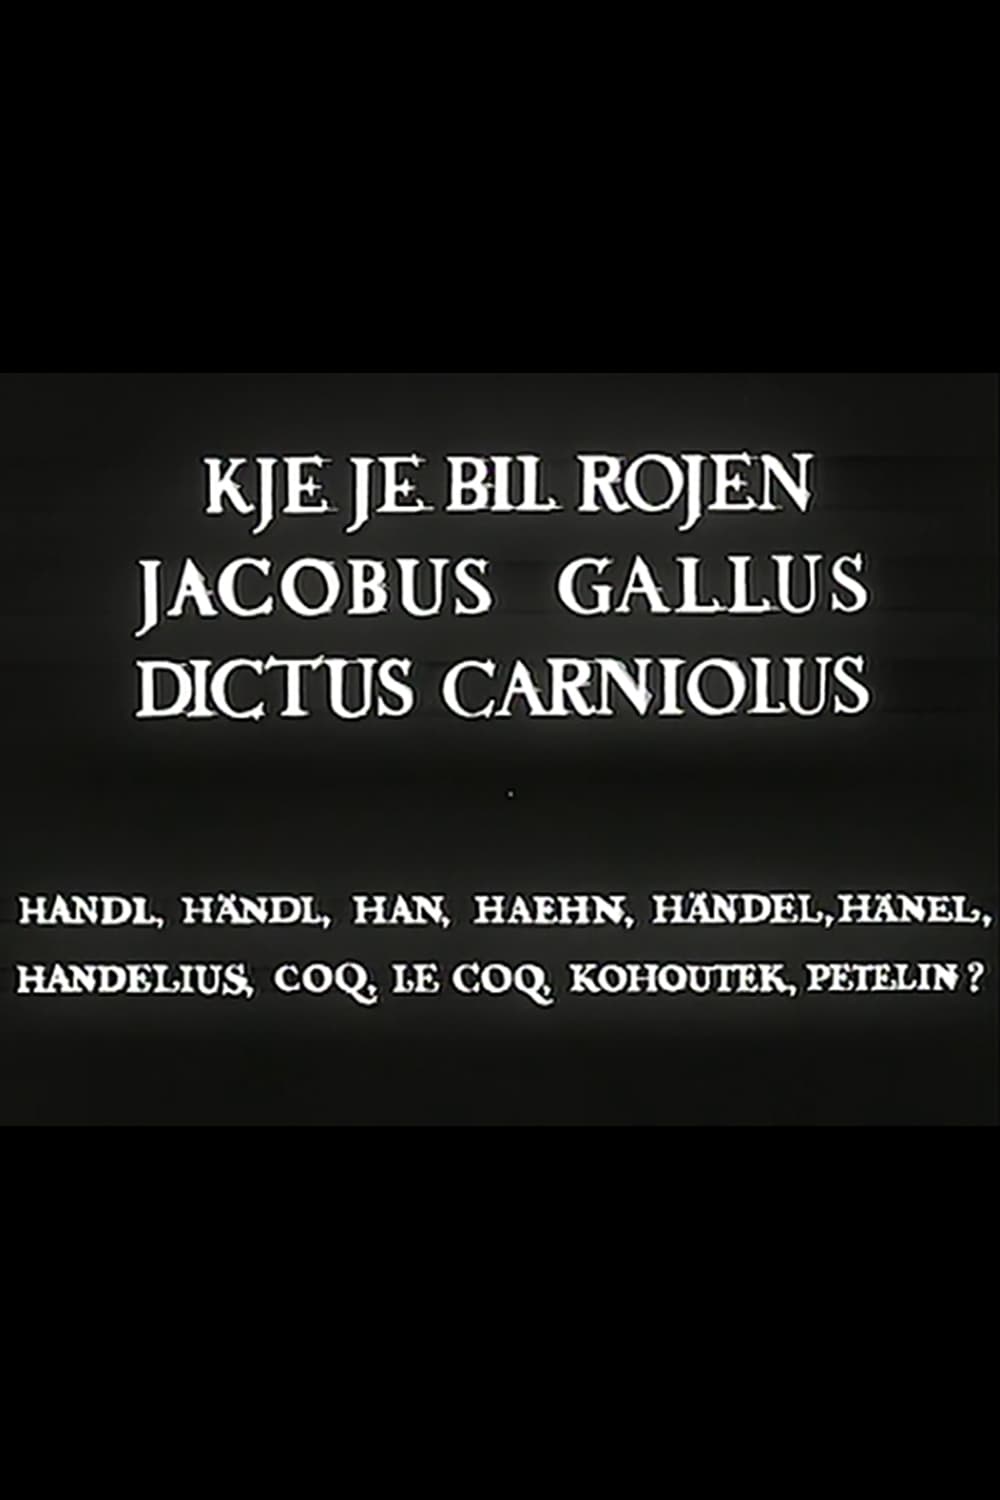 Where Was Jacobus Gallus Born